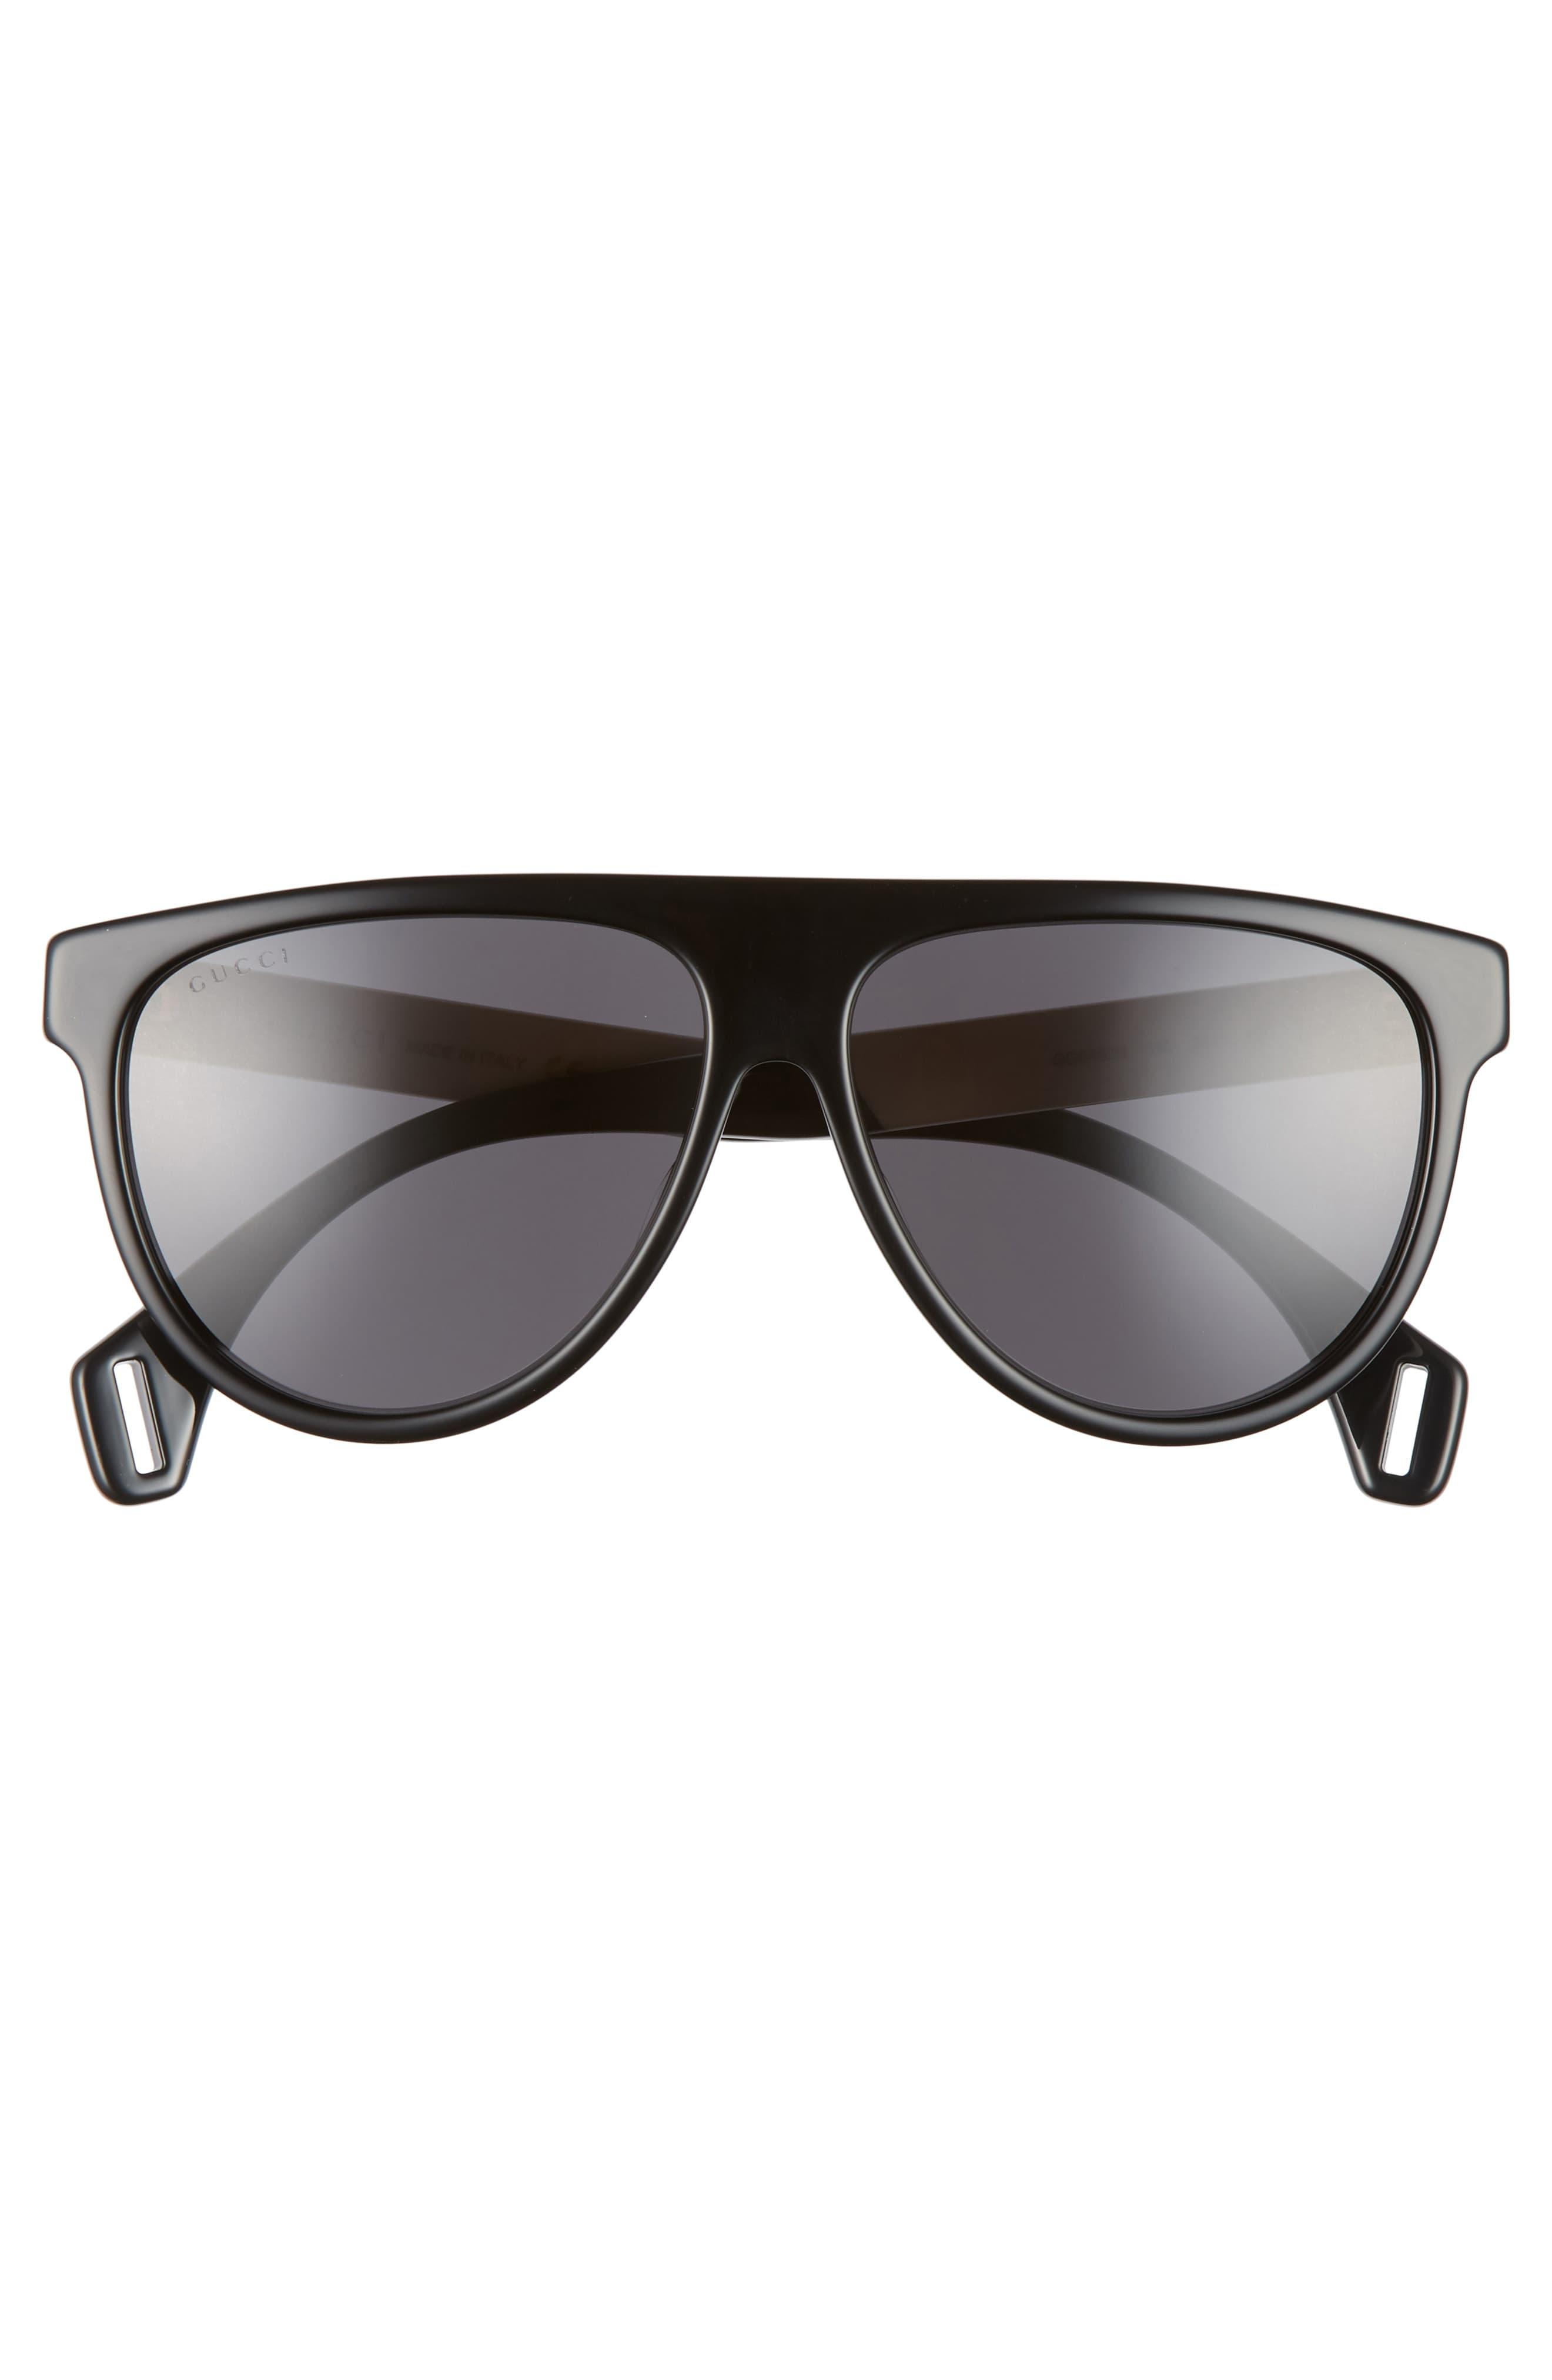 Gucci 58mm Aviator Sunglasses in Black/ Grey (Gray) for Men - Lyst